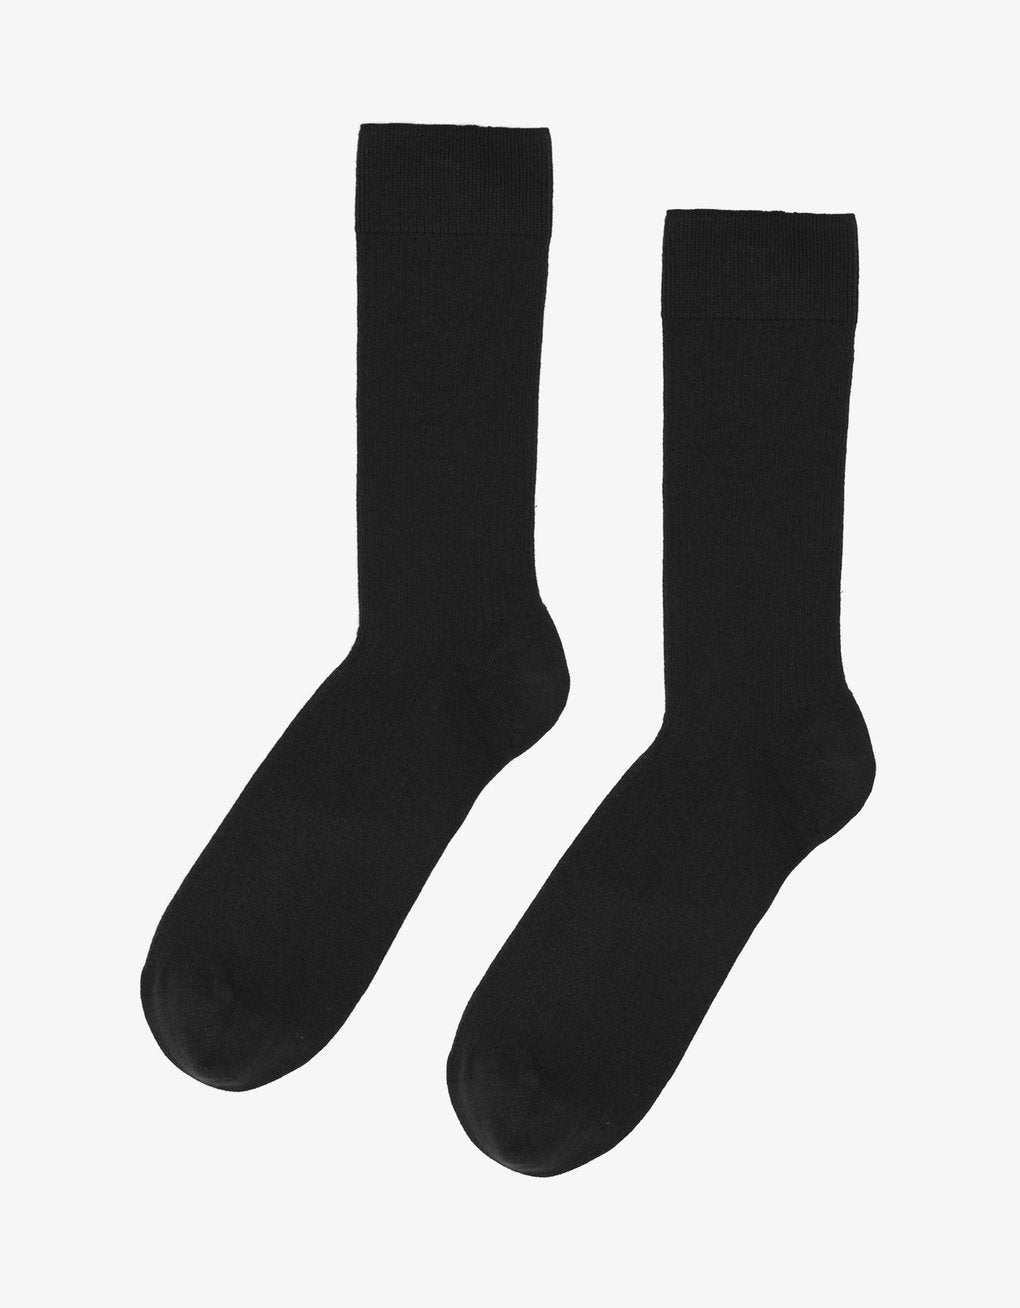 Organic Socks - COLORFUL STANDARD